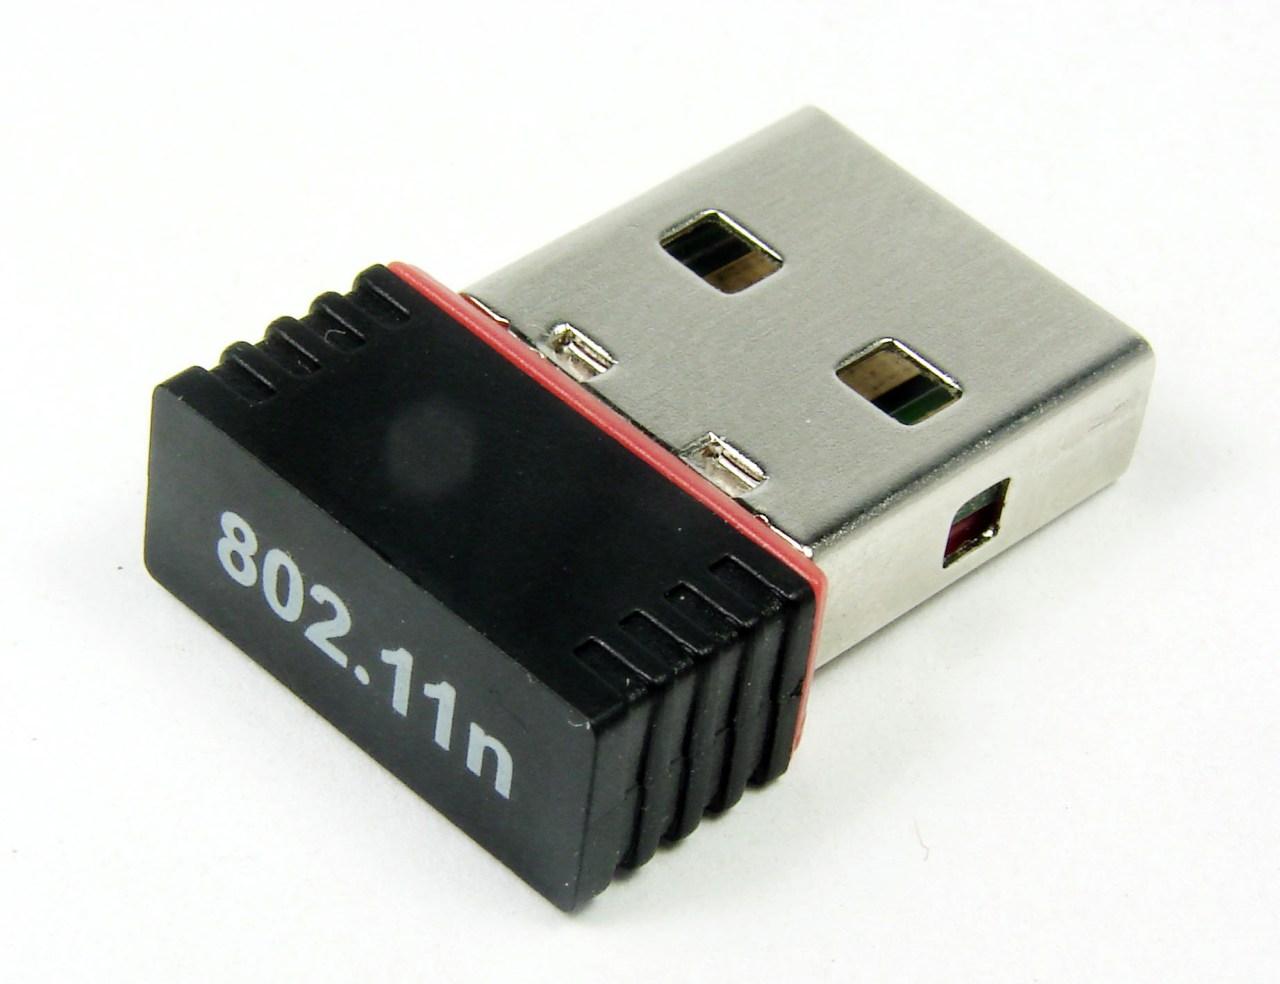  RaLink RT-5370  802.11n XC1291 nano USB, ralink rt5370, ralink rt5370